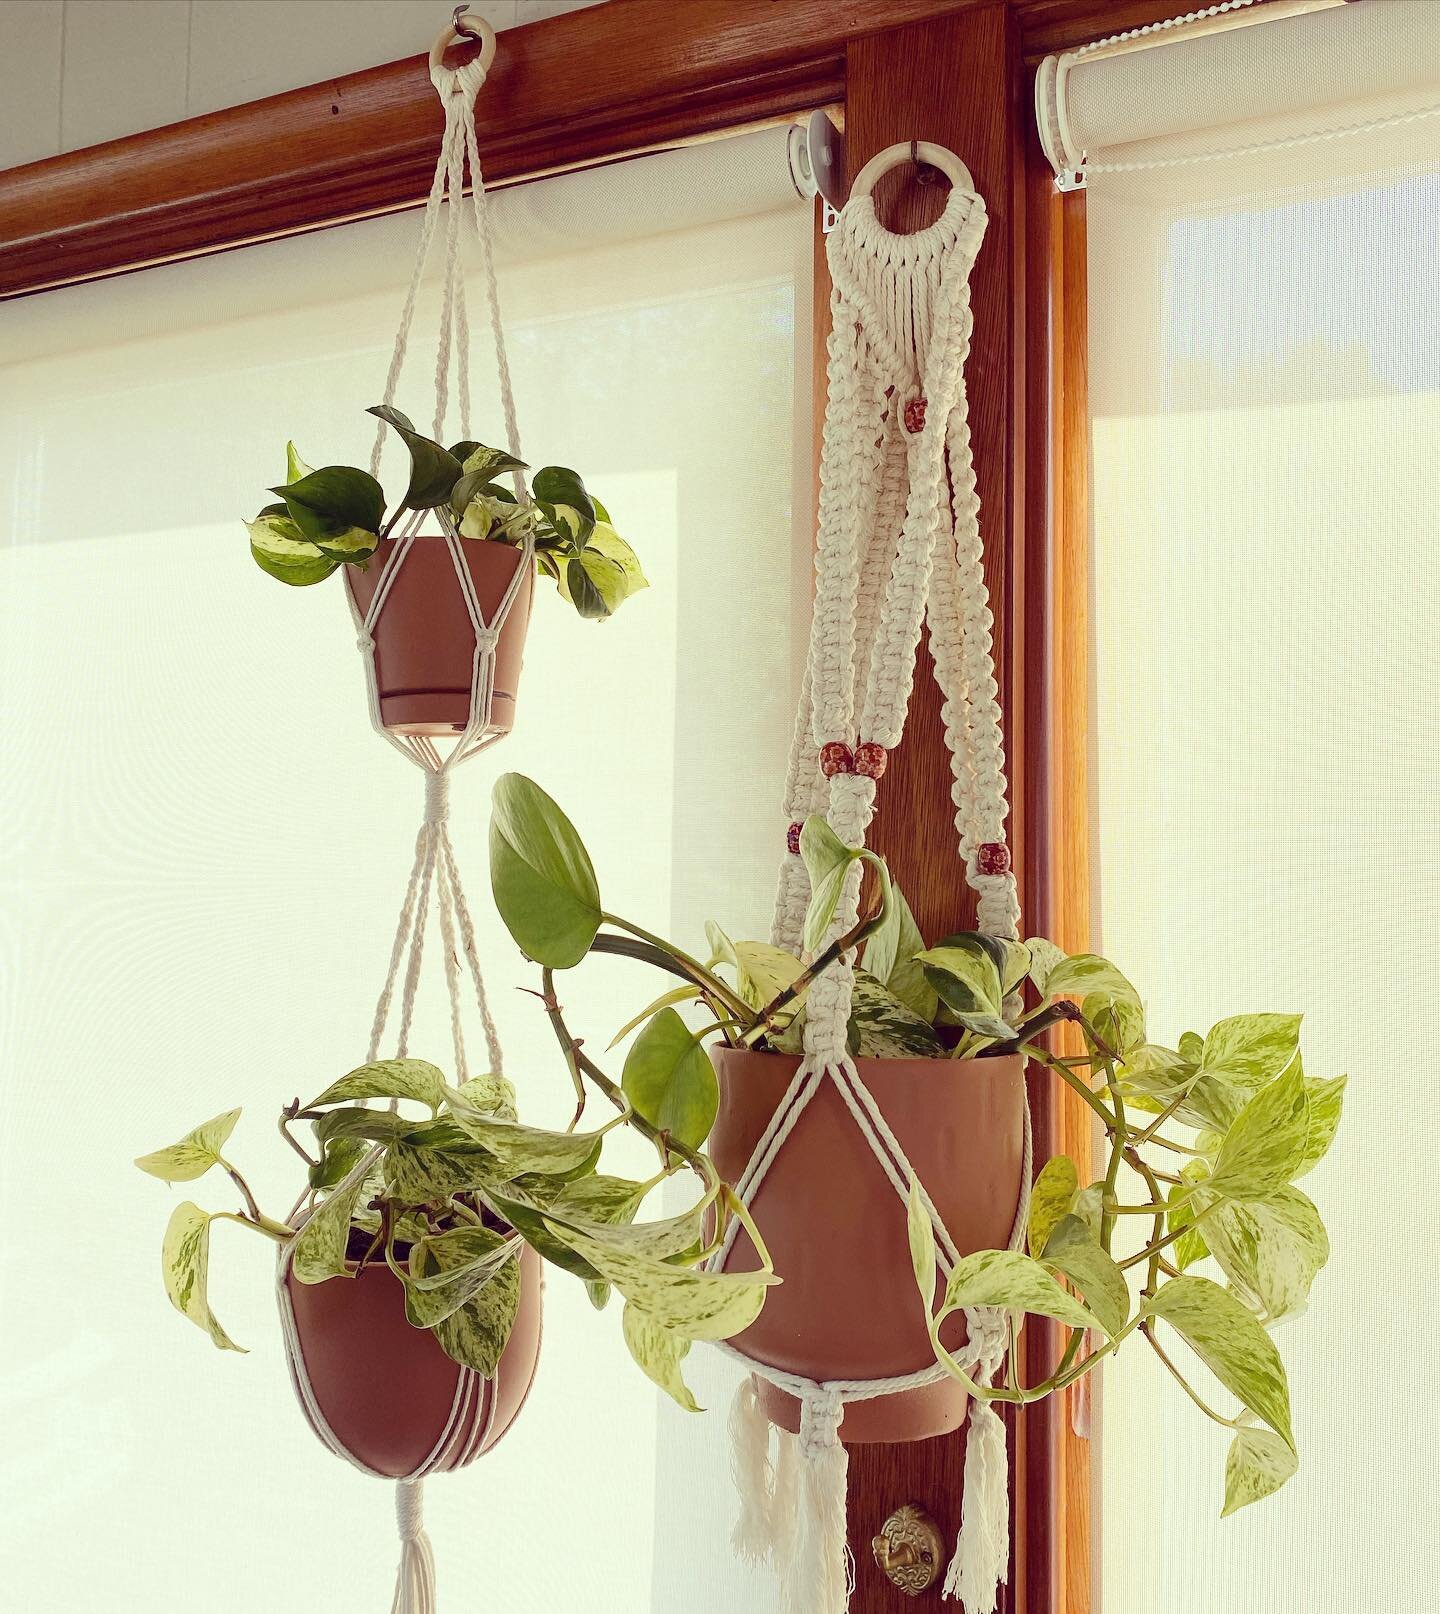 Hanging Pothos 🌱 $75 each 
(2 available)

💡 repurposed pots, handmade macram&eacute; hangers &amp; golden pothos 

#macrame #diy #ideasgirls #handmade #hangingplant #plantobsessed #goldenpothos